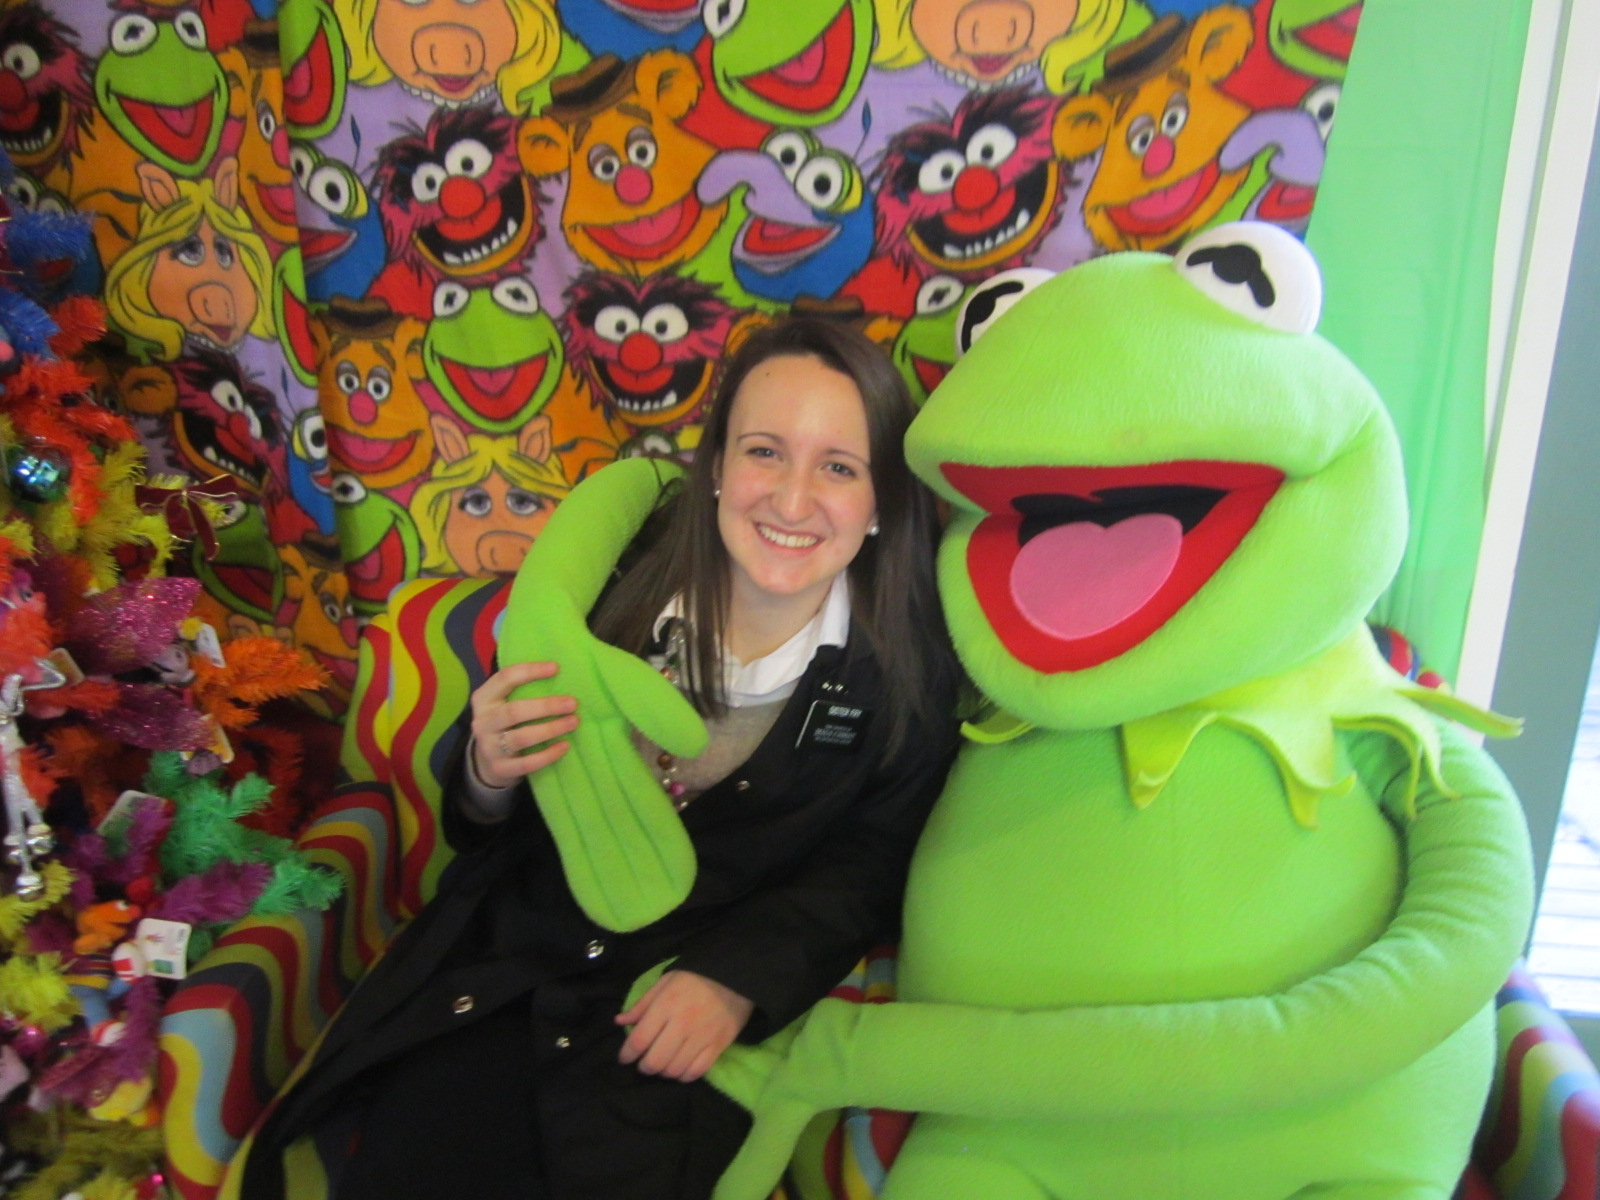 Meeting Kermit the Frog